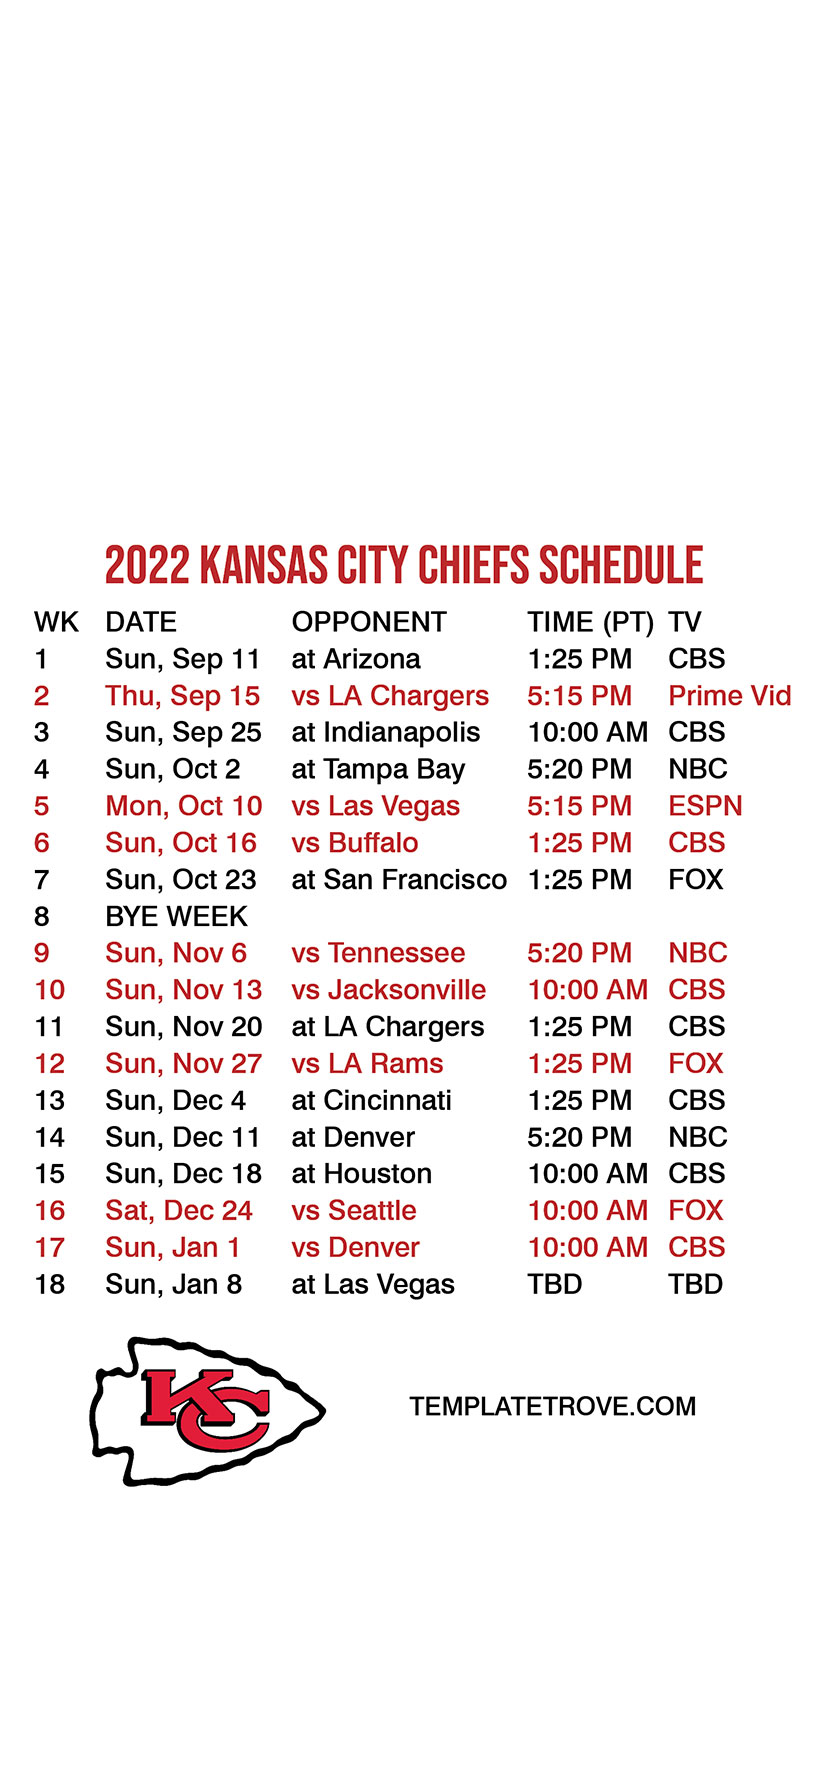 2022-2023 Kansas City Chiefs Lock Screen Schedule for iPhone 6-7-8 Plus